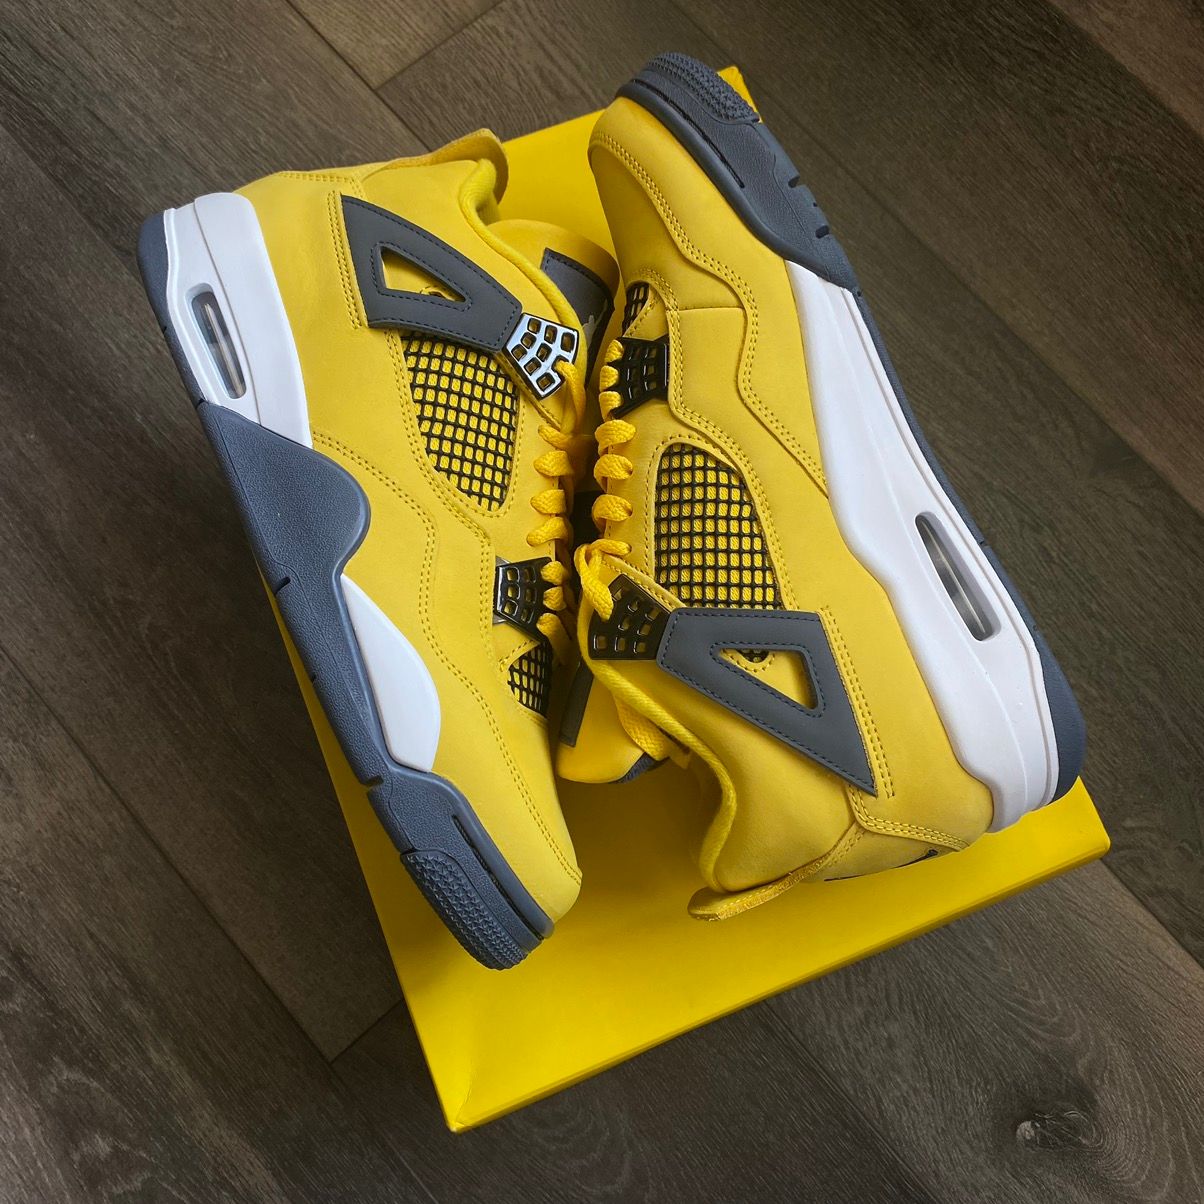 Pre-owned Jordan Brand Air Jordan 4 Retro Lightning Shoes Size 9.5 In Tour Yellow